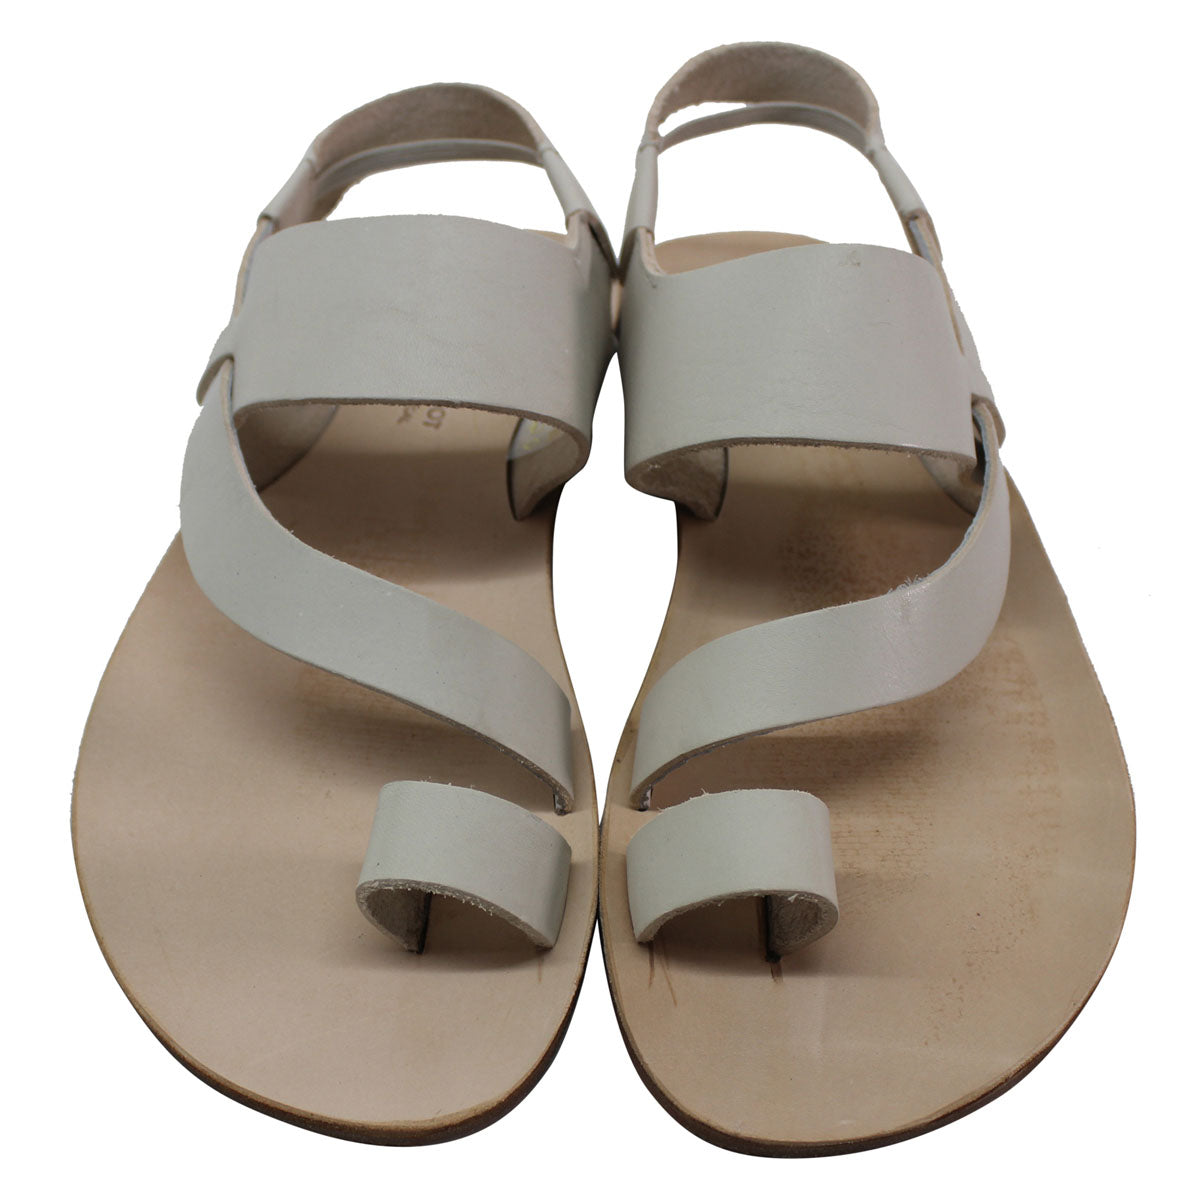 Vivobarefoot Womens Opanka 203225 Leather Sandals - UK 7